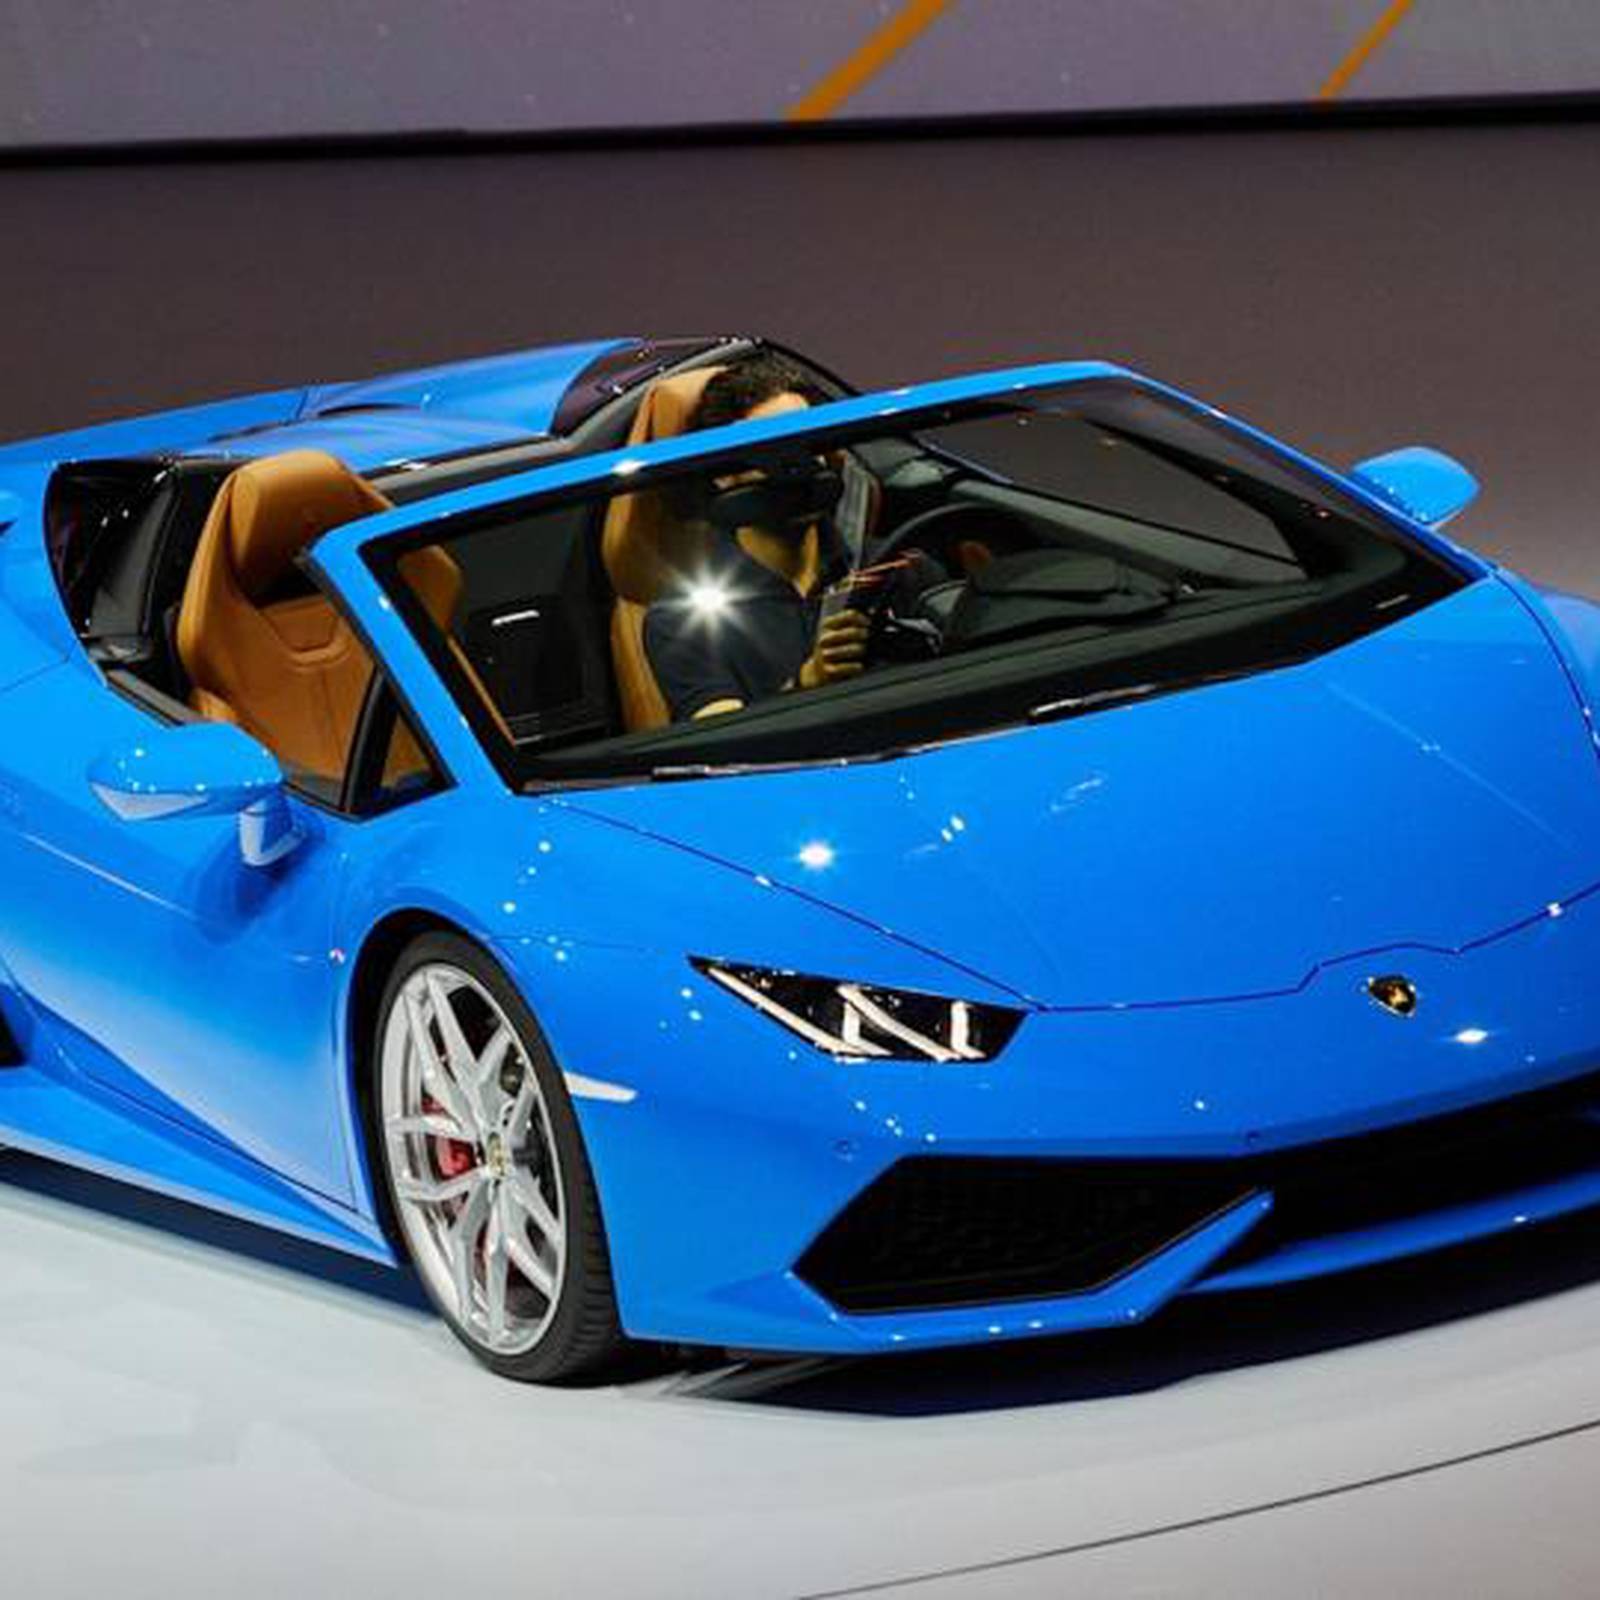 Frankfurt motor show: Lamborghini's new electric supercar with